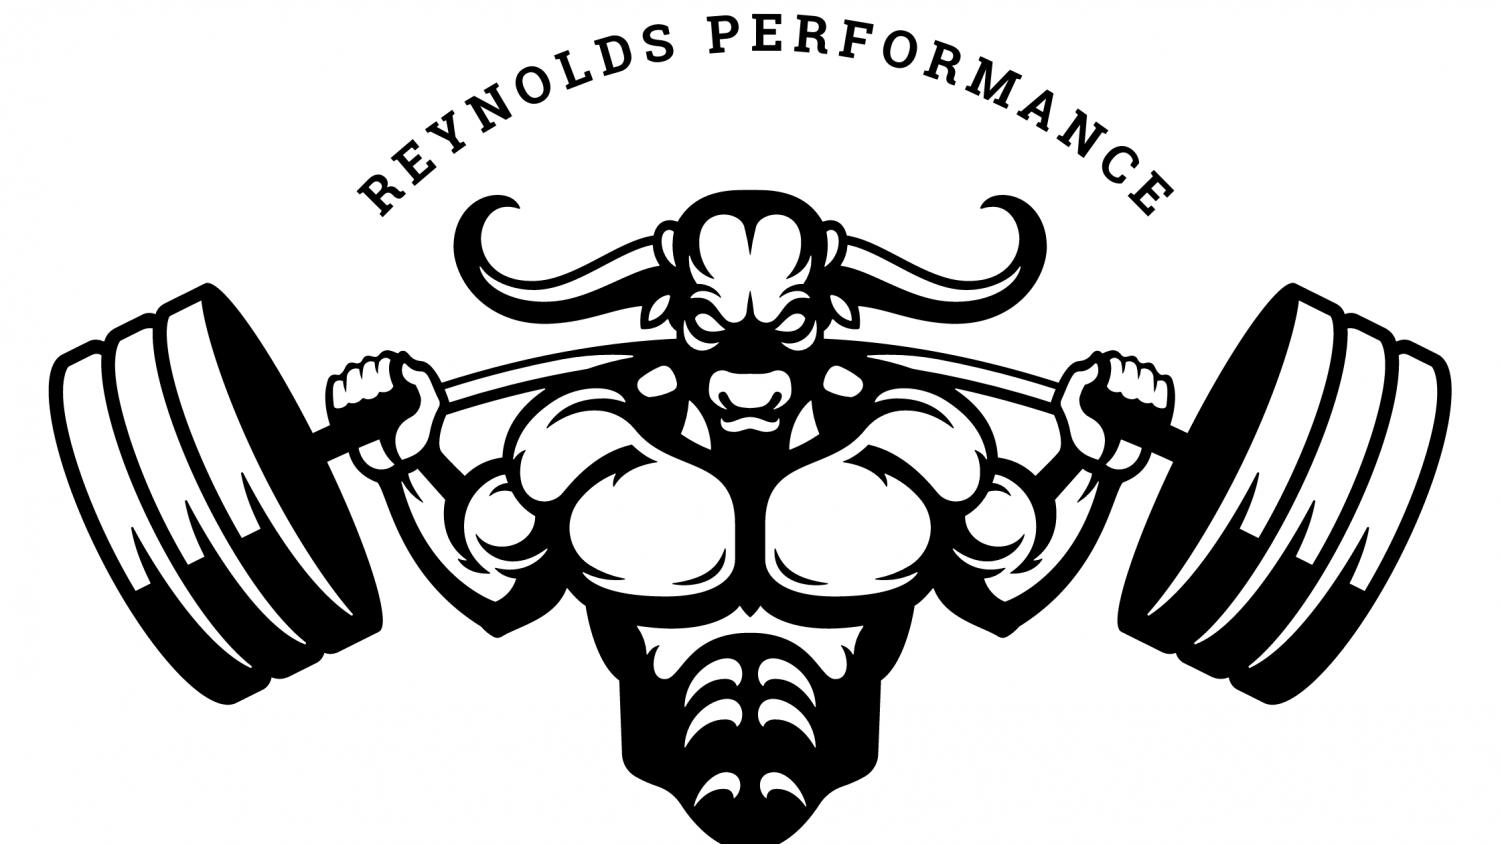 Reynolds Performance